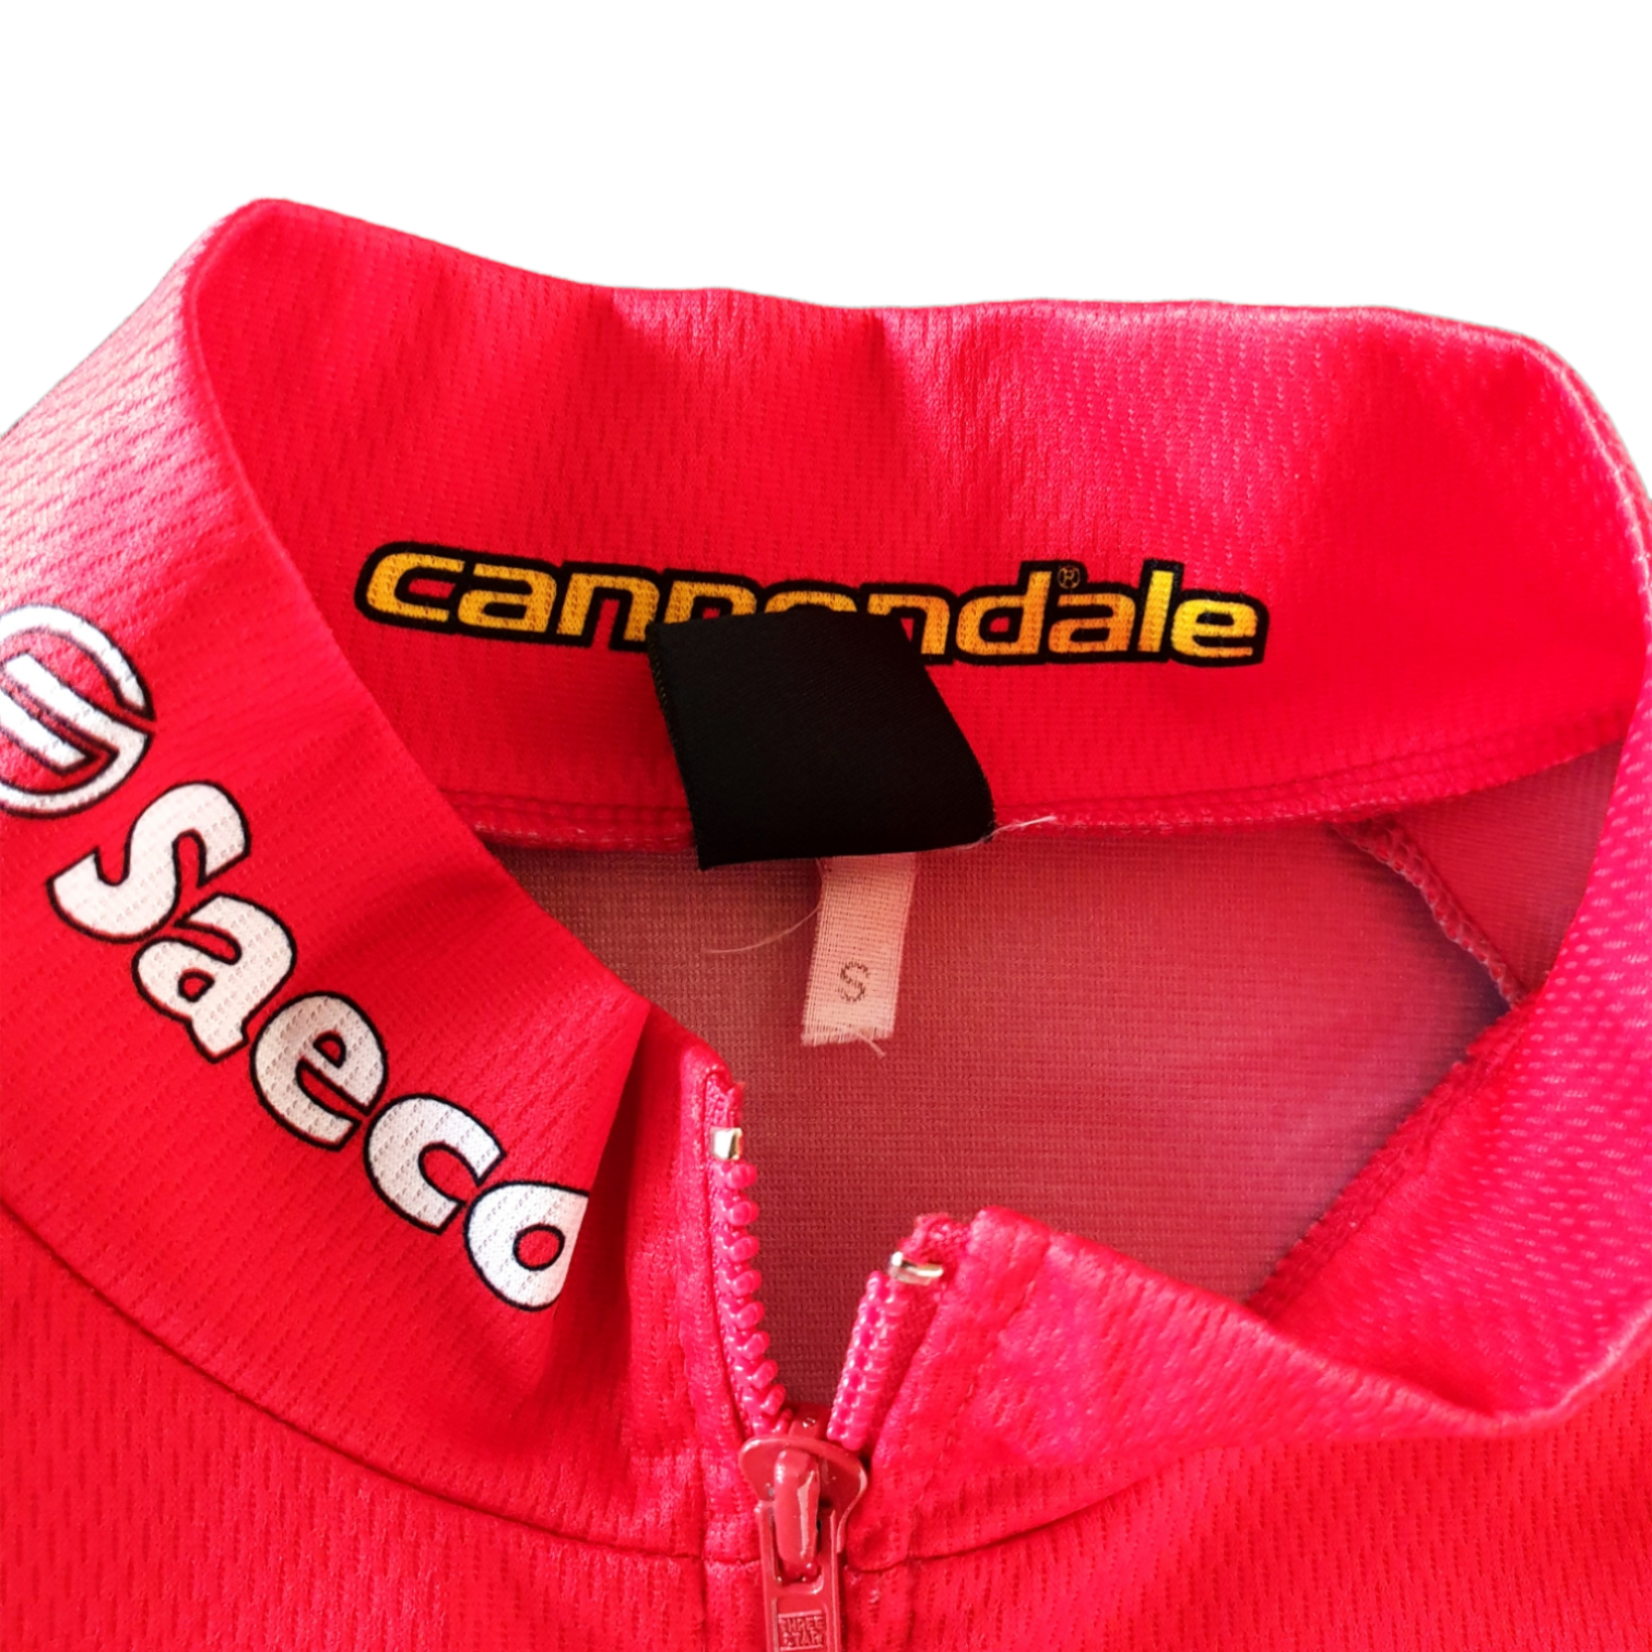 Cannondale Origineel Cannondale vintage wielershirt Saeco - Macchine per Caffé - Valli & Vall 2000